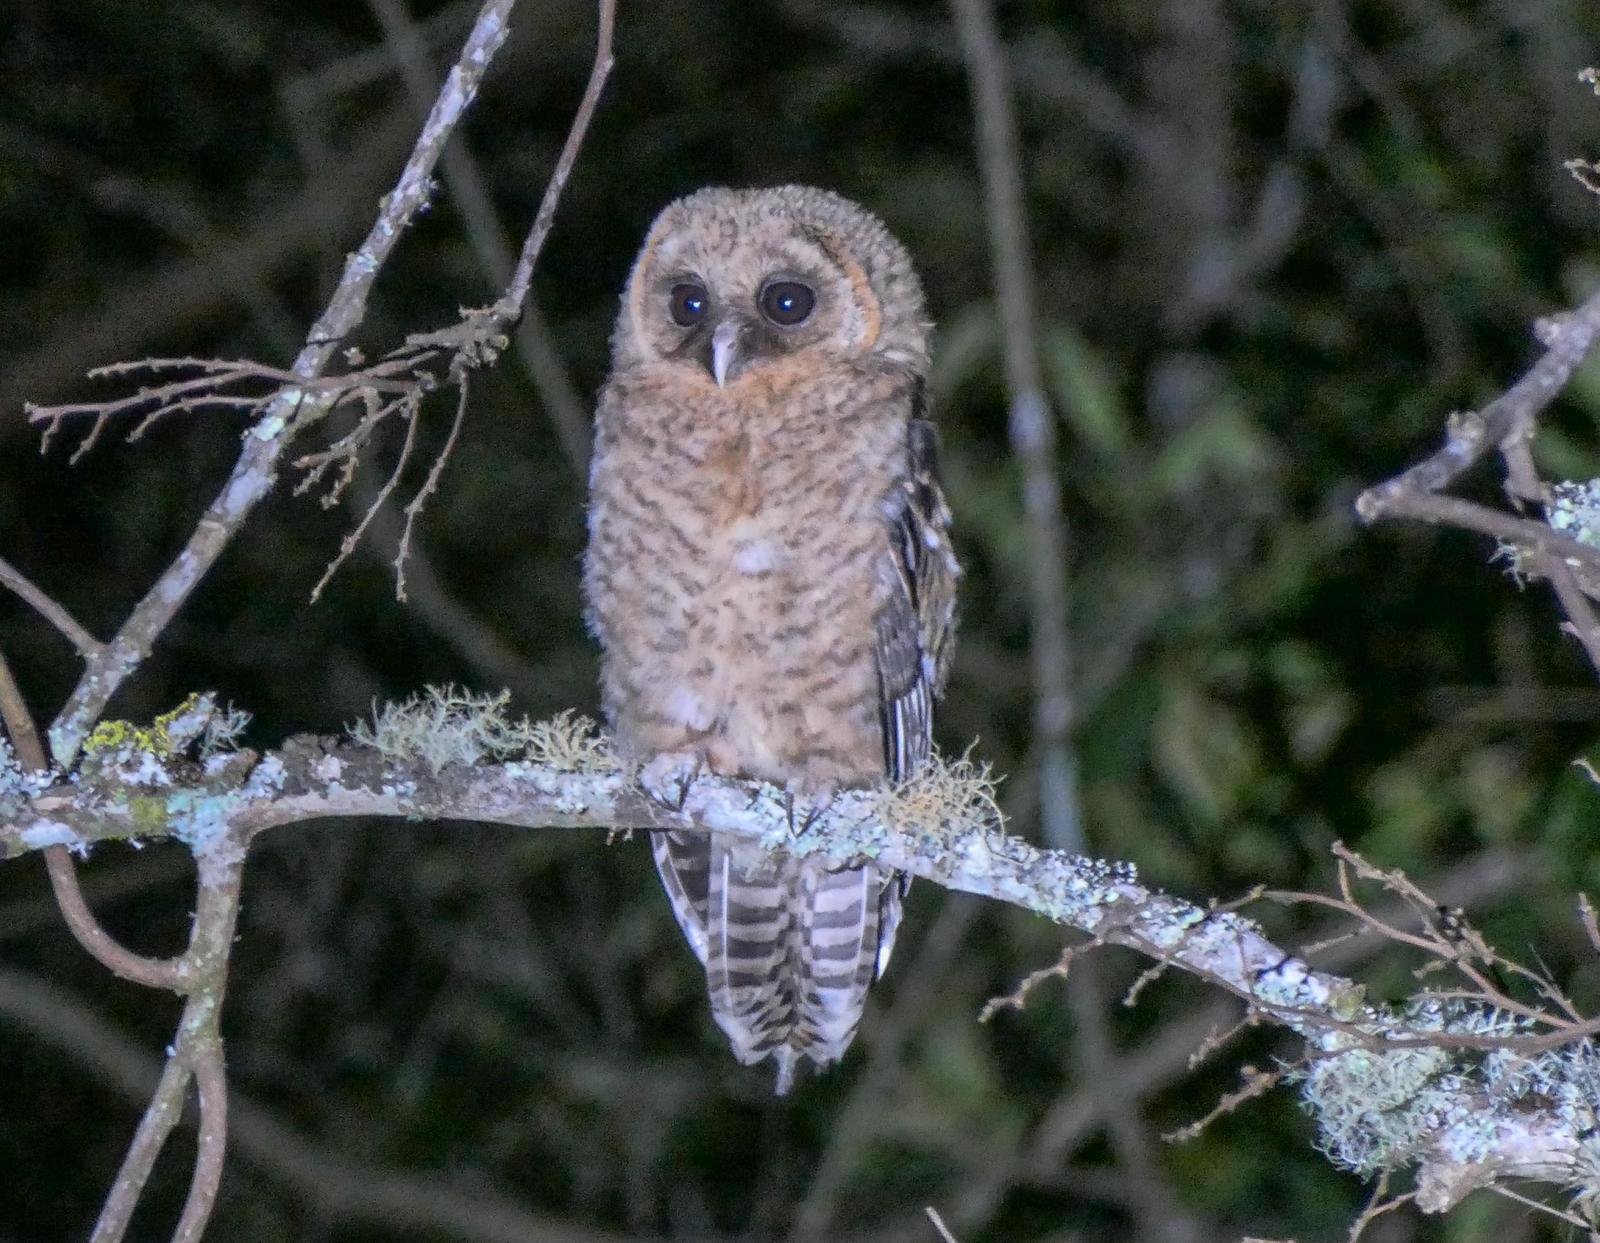 Rusty-barred Owl Photo by Randy Siebert